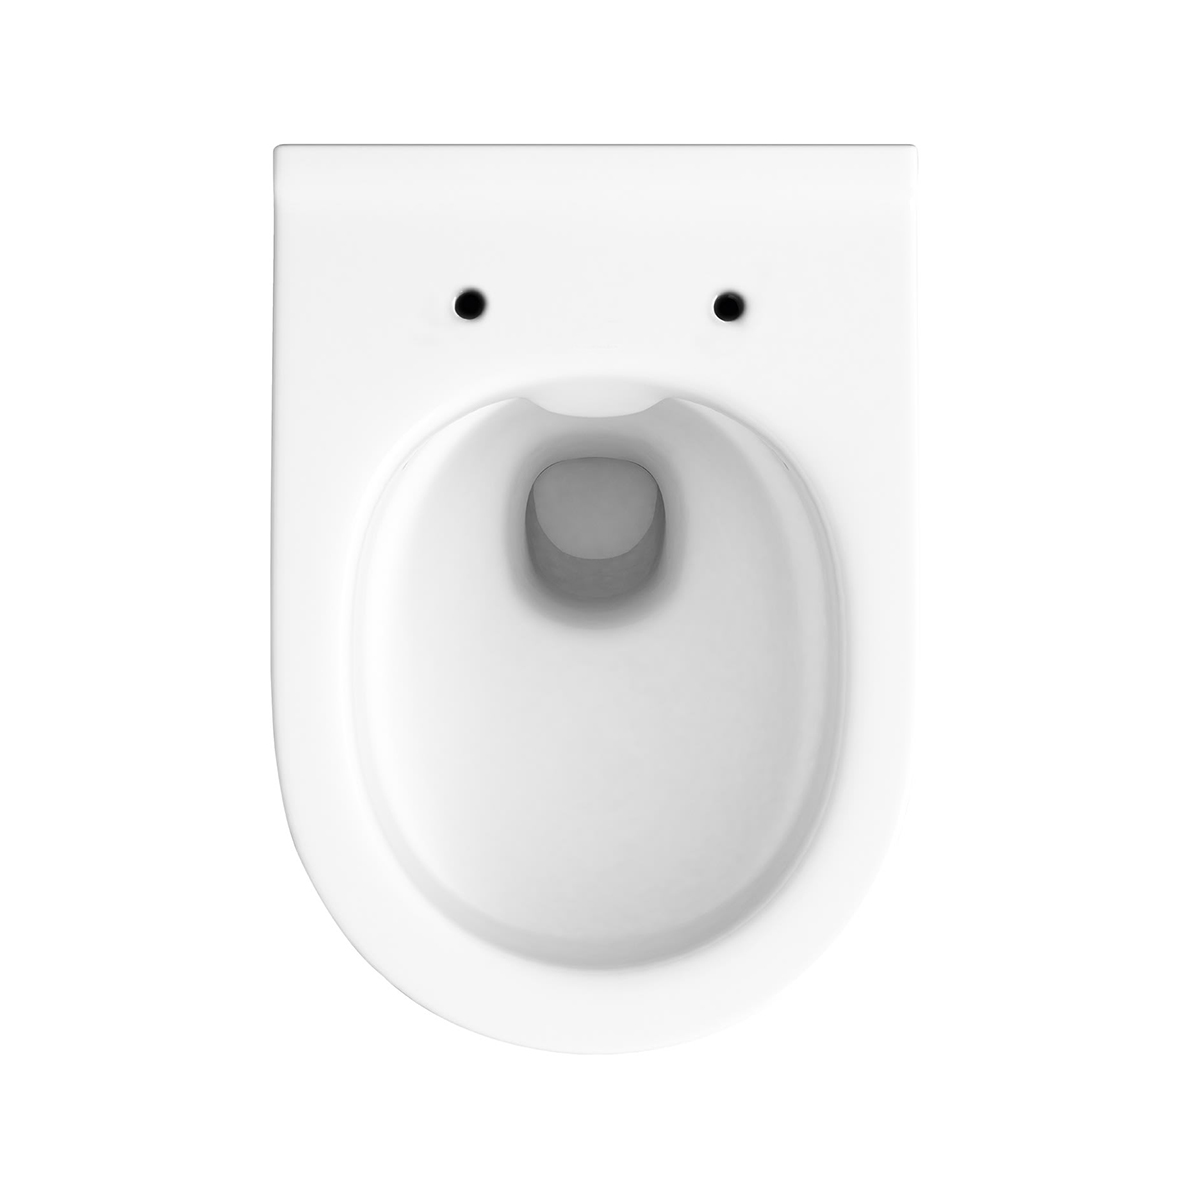 WC Wand-Tiefspül-WC Danpasar spülrandlos Absenkautomatik